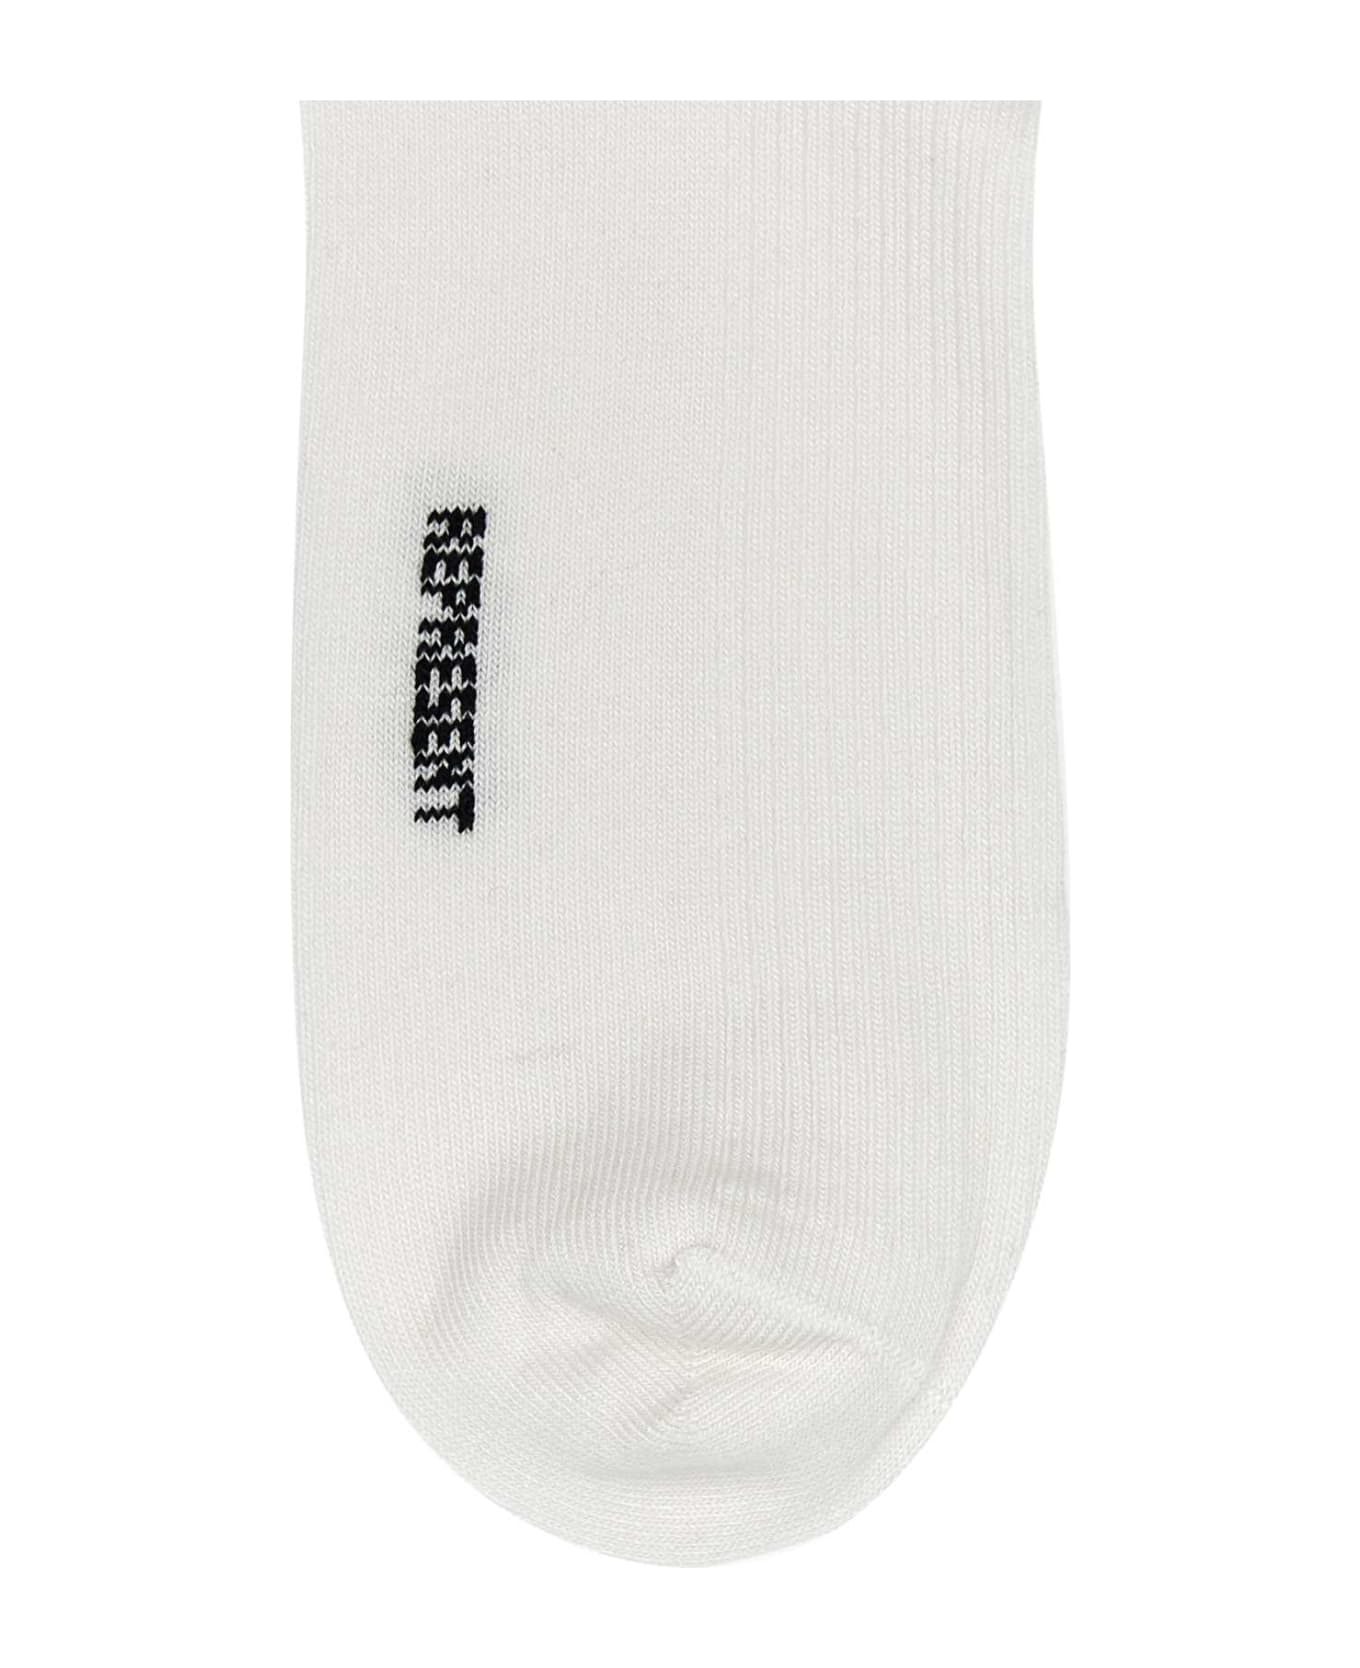 REPRESENT White Cotton And Acrylic Socks - 01